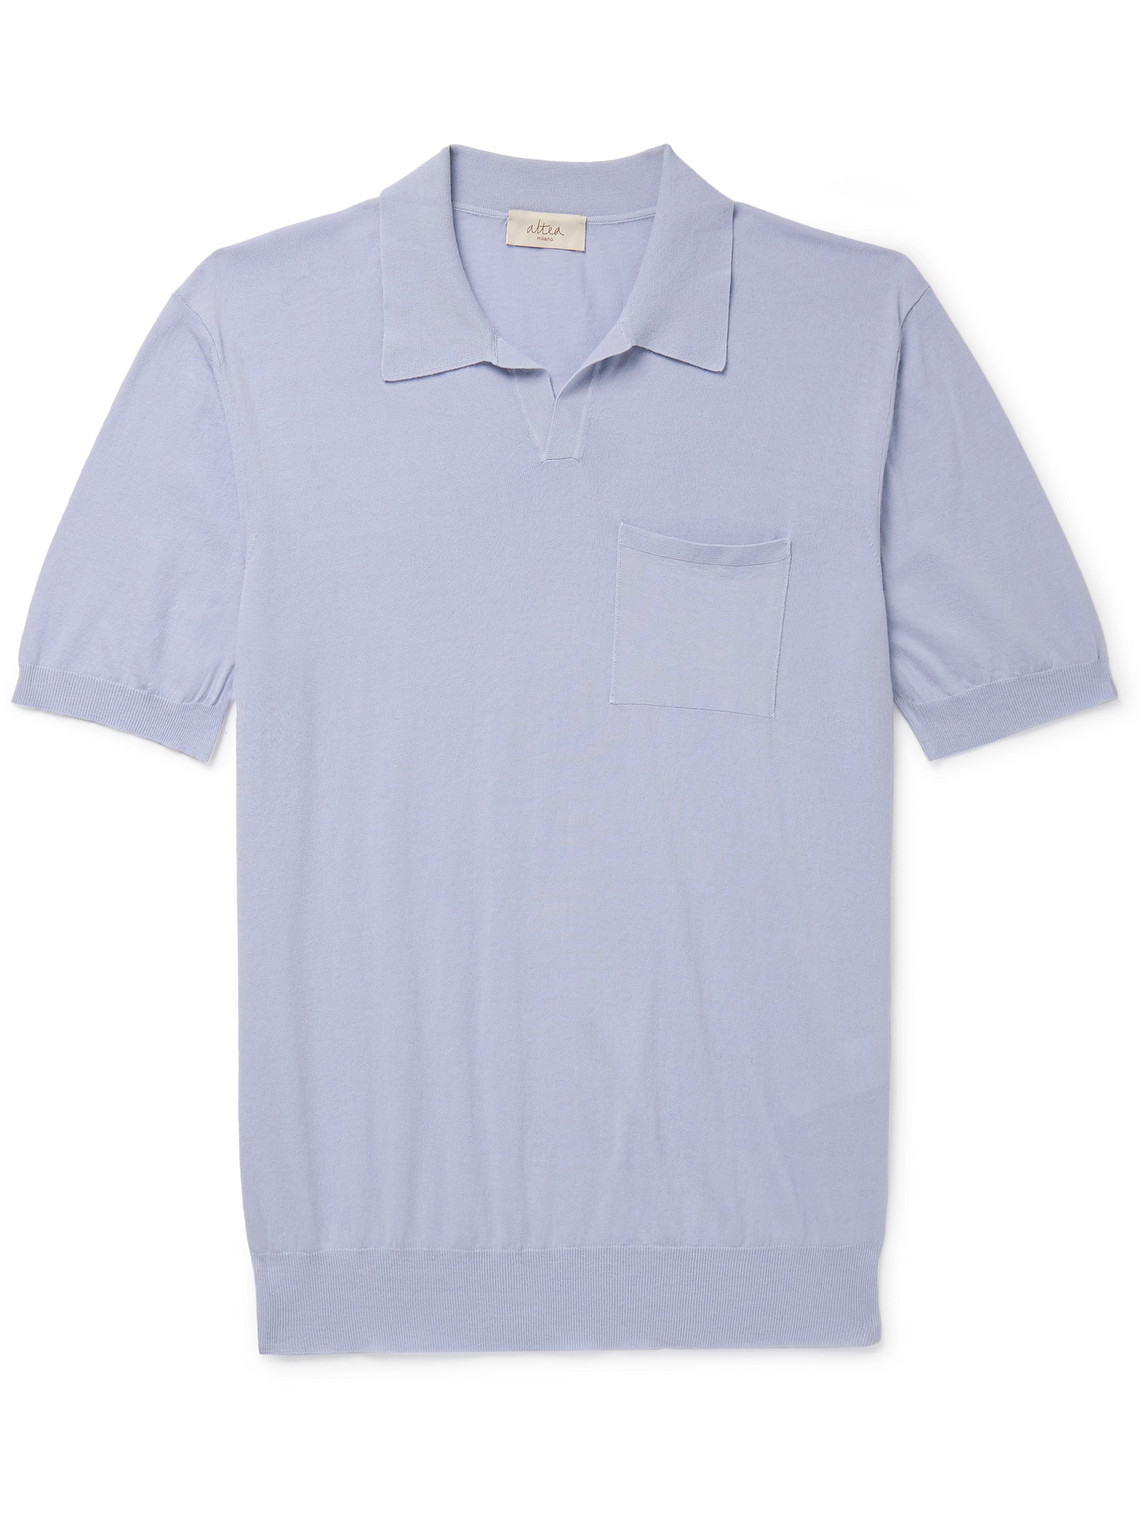 Altea - Slim-Fit Garment-Dyed Cotton Polo Shirt - Men - Blue - XXL von Altea